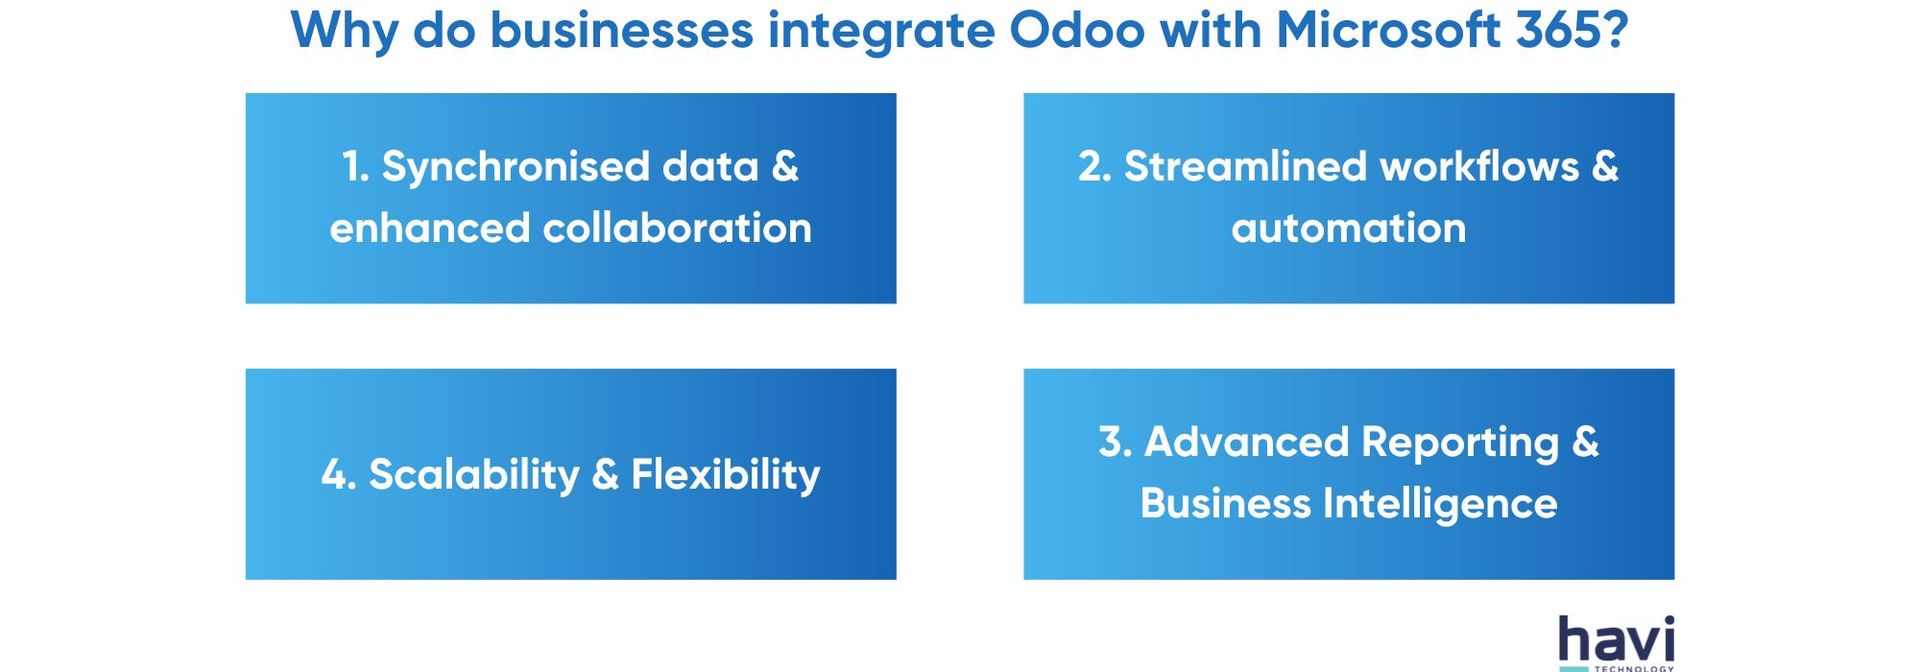 odoo office 365 integration Havi Technology Pty Ltd